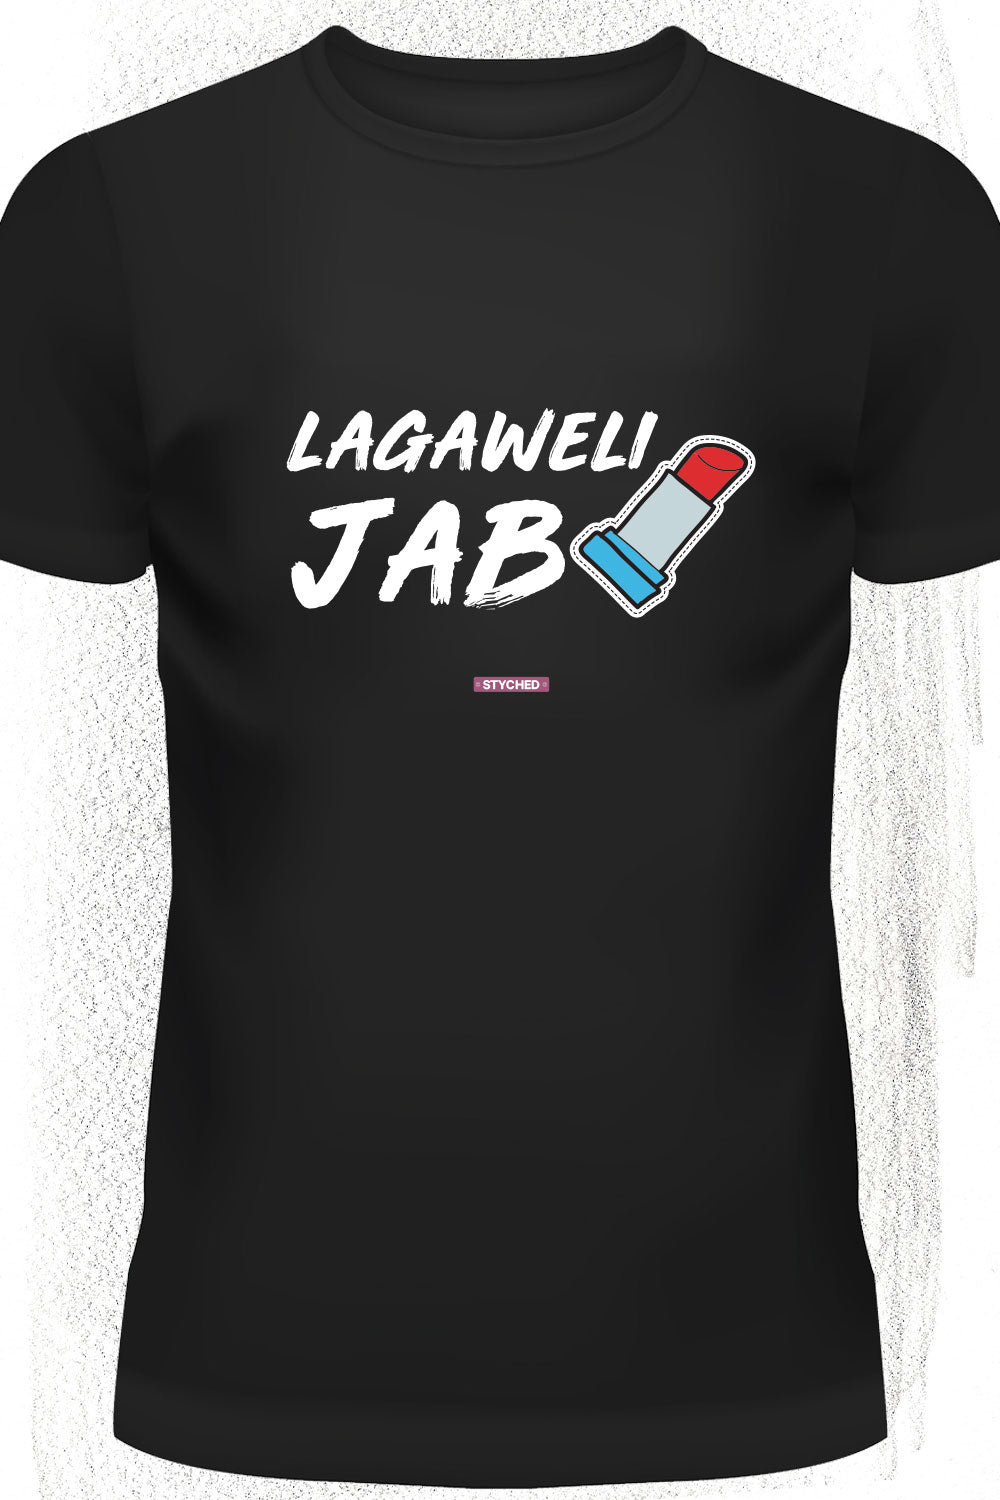 Lagaweli Jab Lipistick - Quirky Graphic T-Shirt Black Color